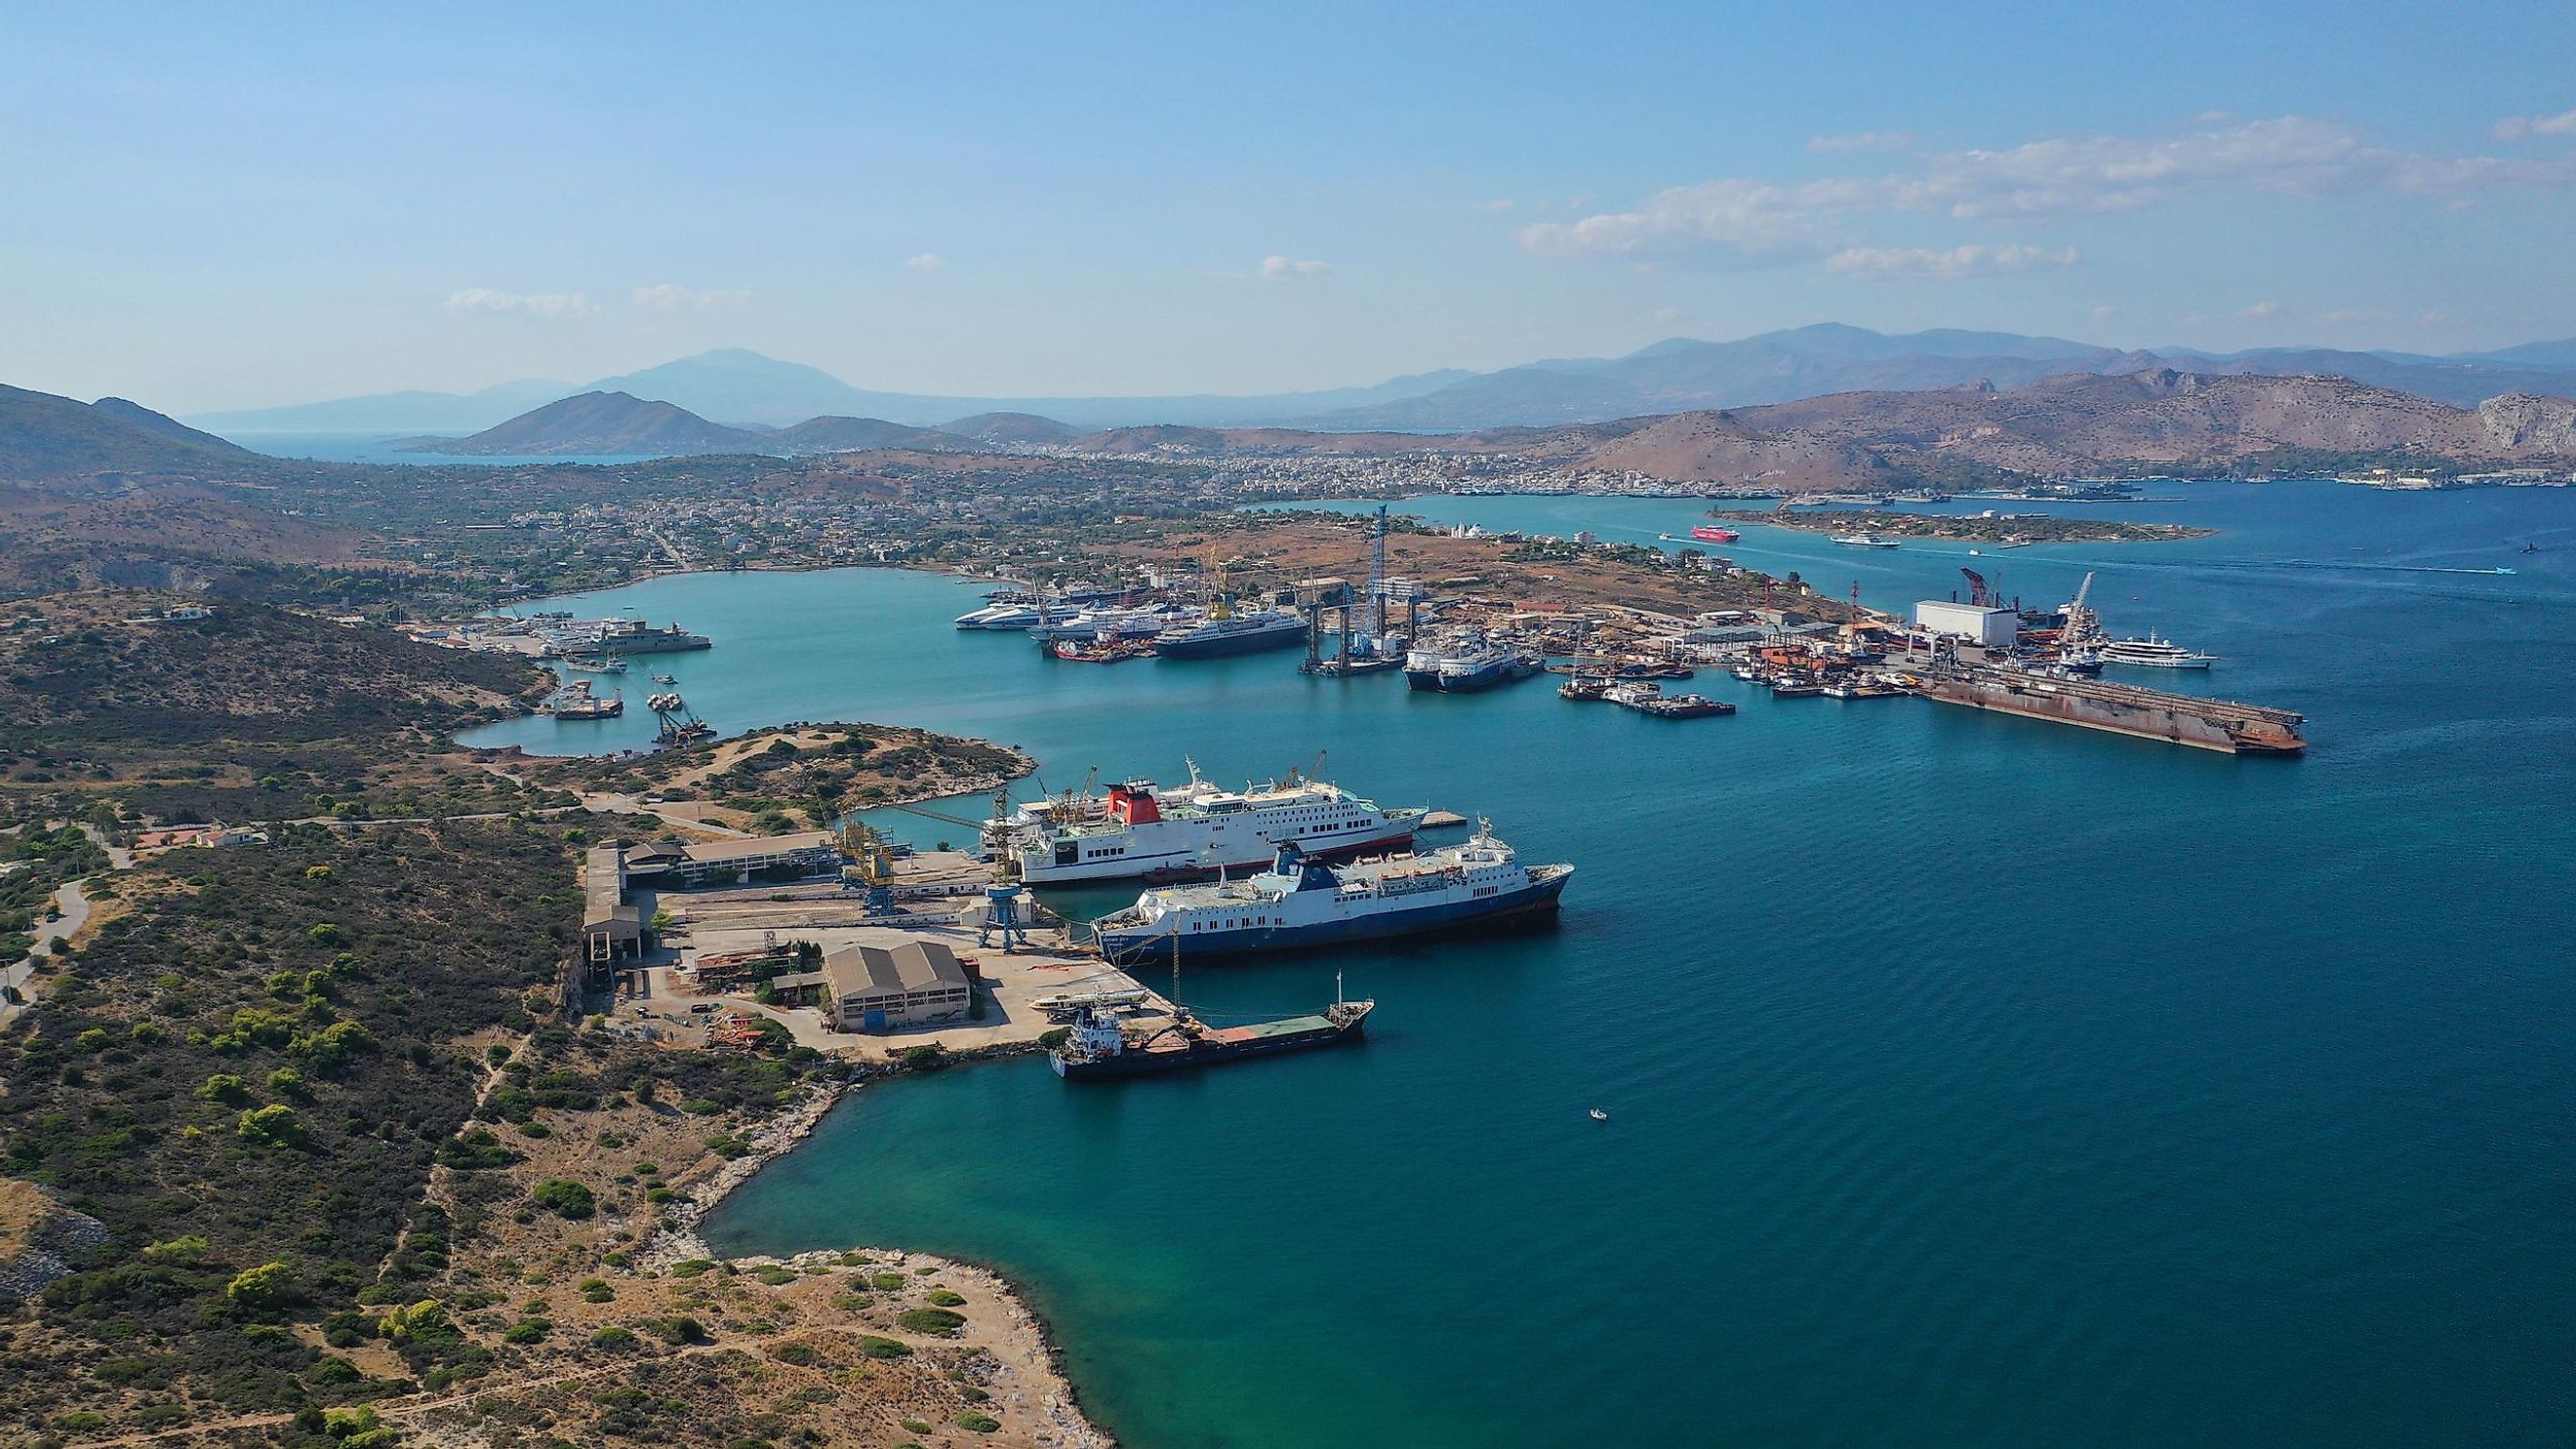 Salamis, Greece. Image credit: Aerial-motion/Shutterstock